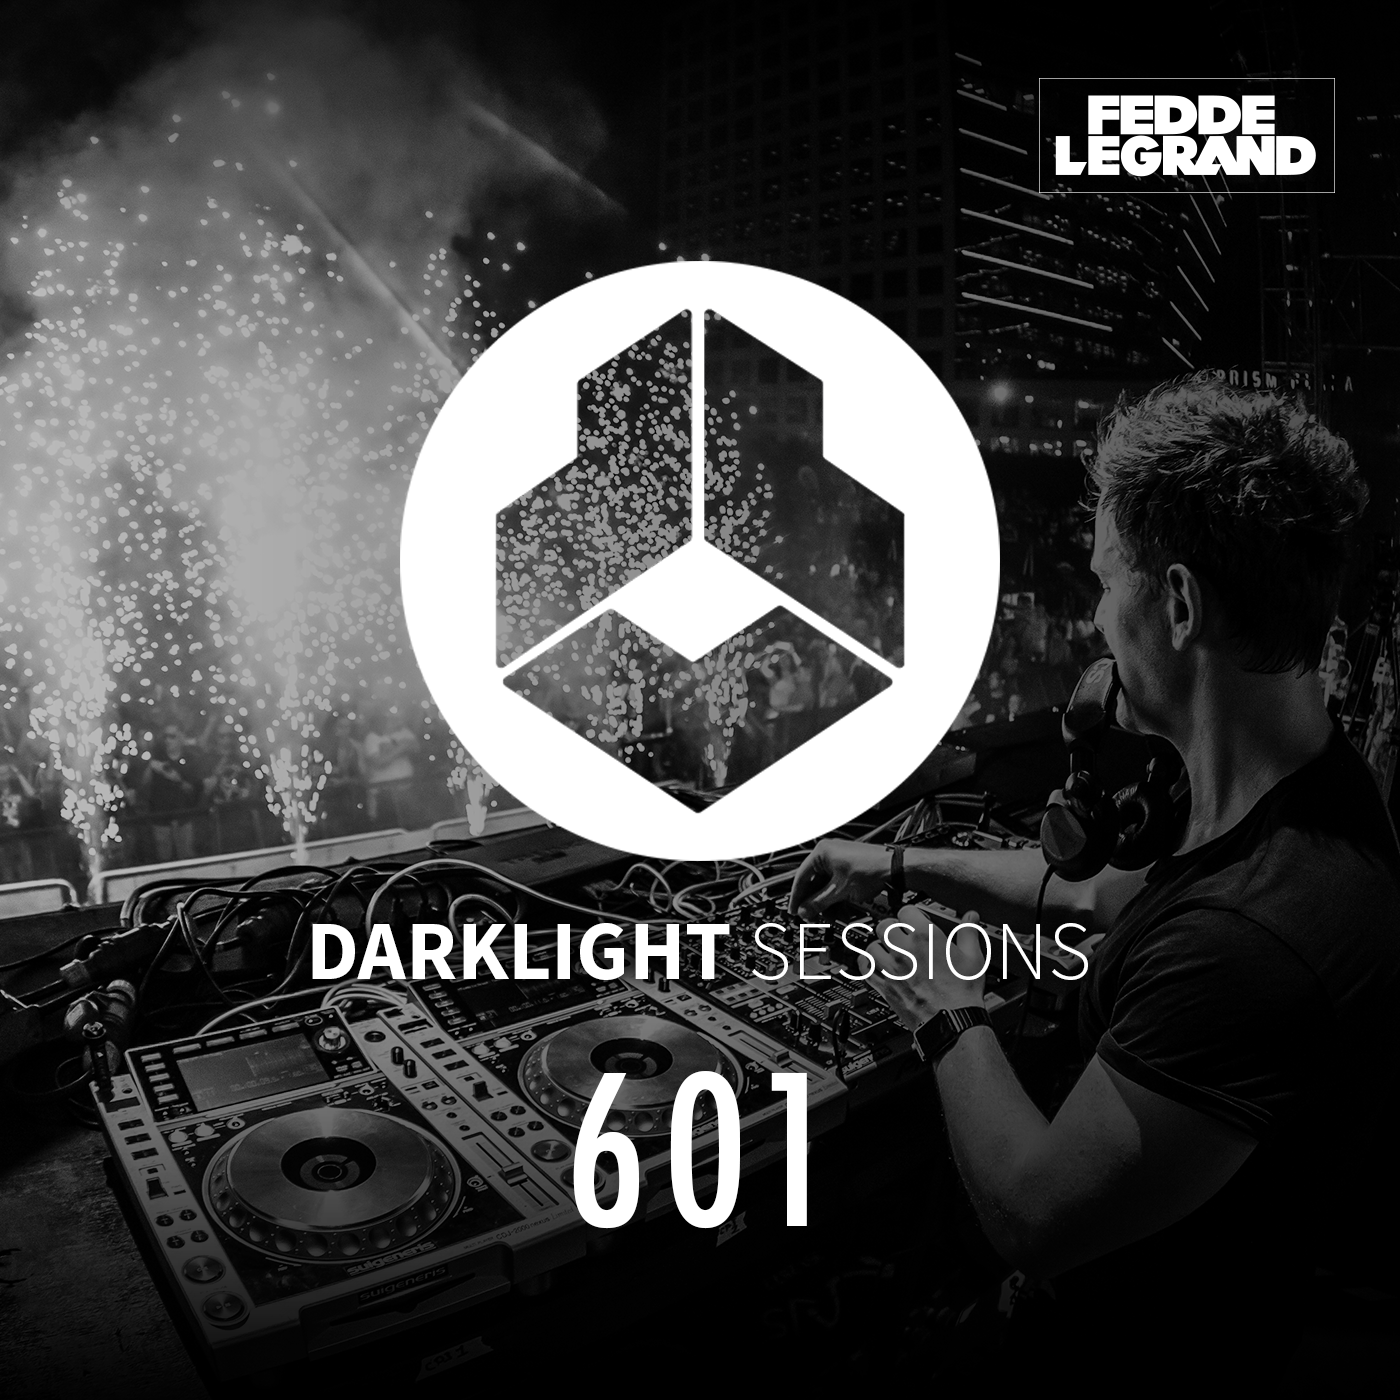 Darklight Sessions 601